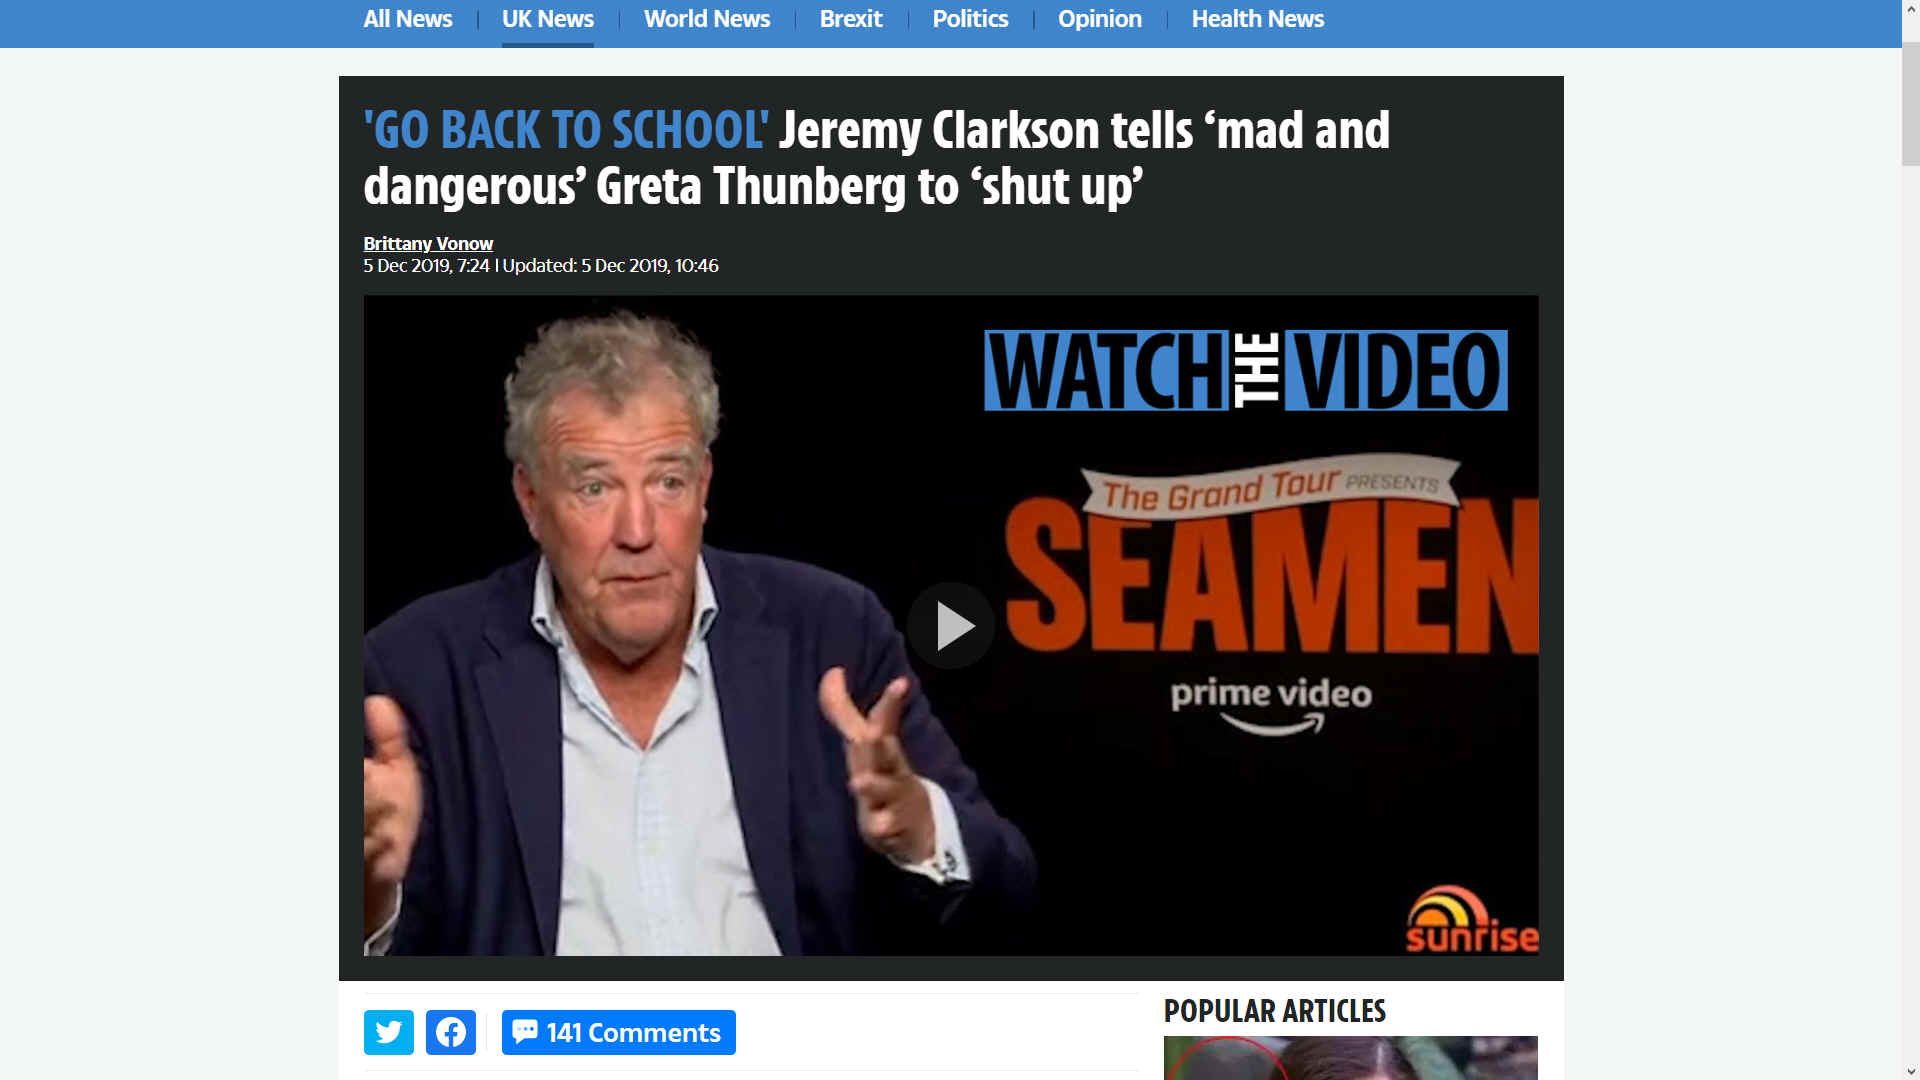 Jeremy Clarkson tells Greta Thunberg to go back to school